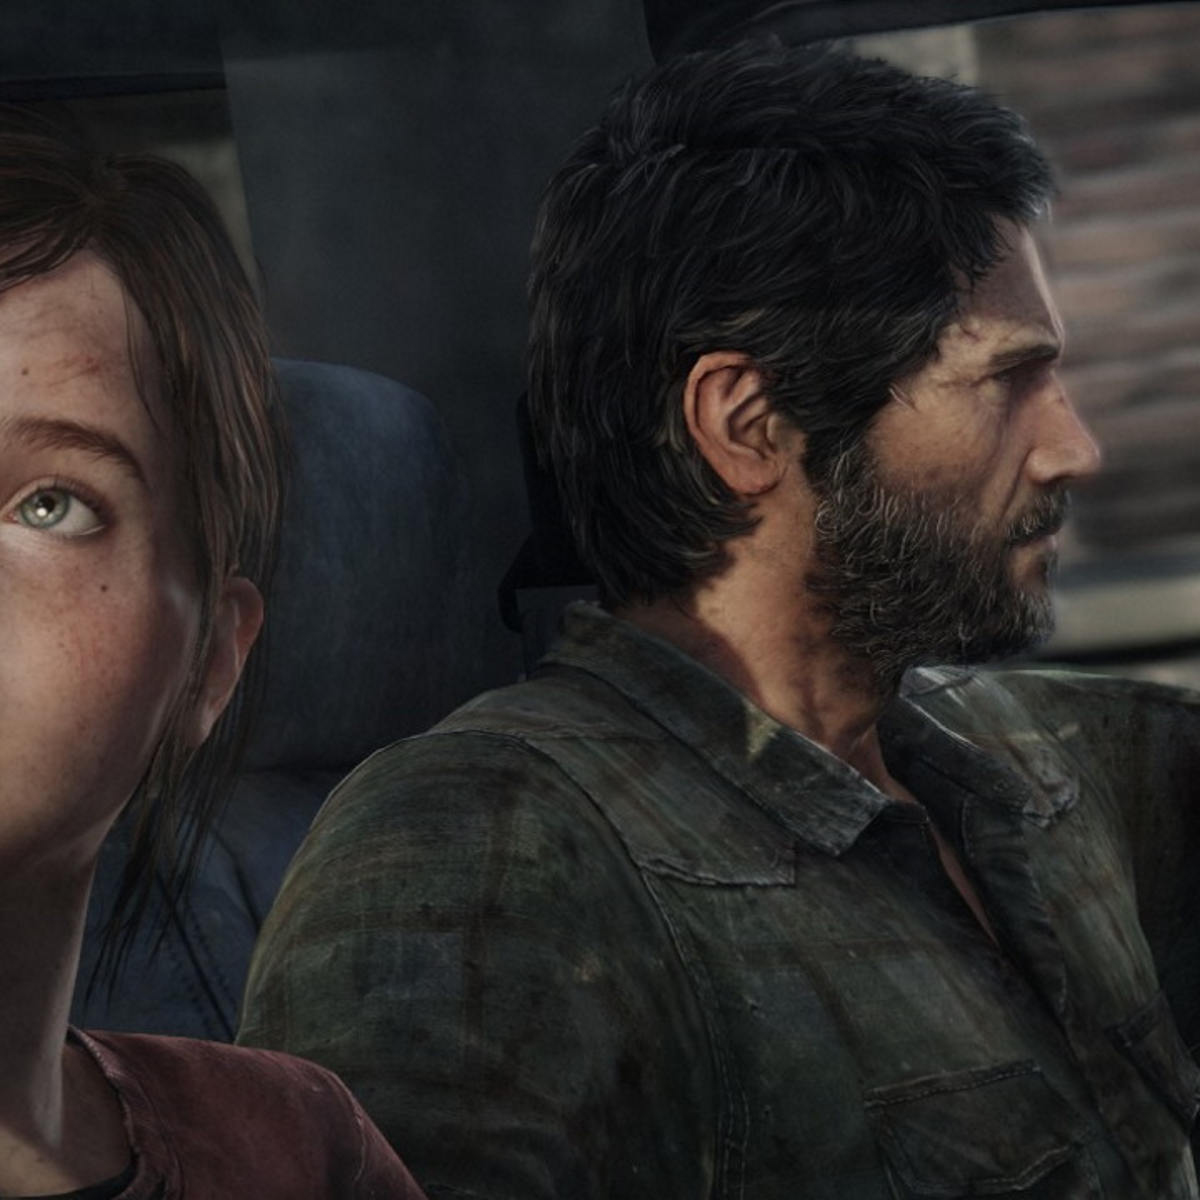 The Last Of Us Part 1 PC Global | OFFLINE Read Description Guaranted